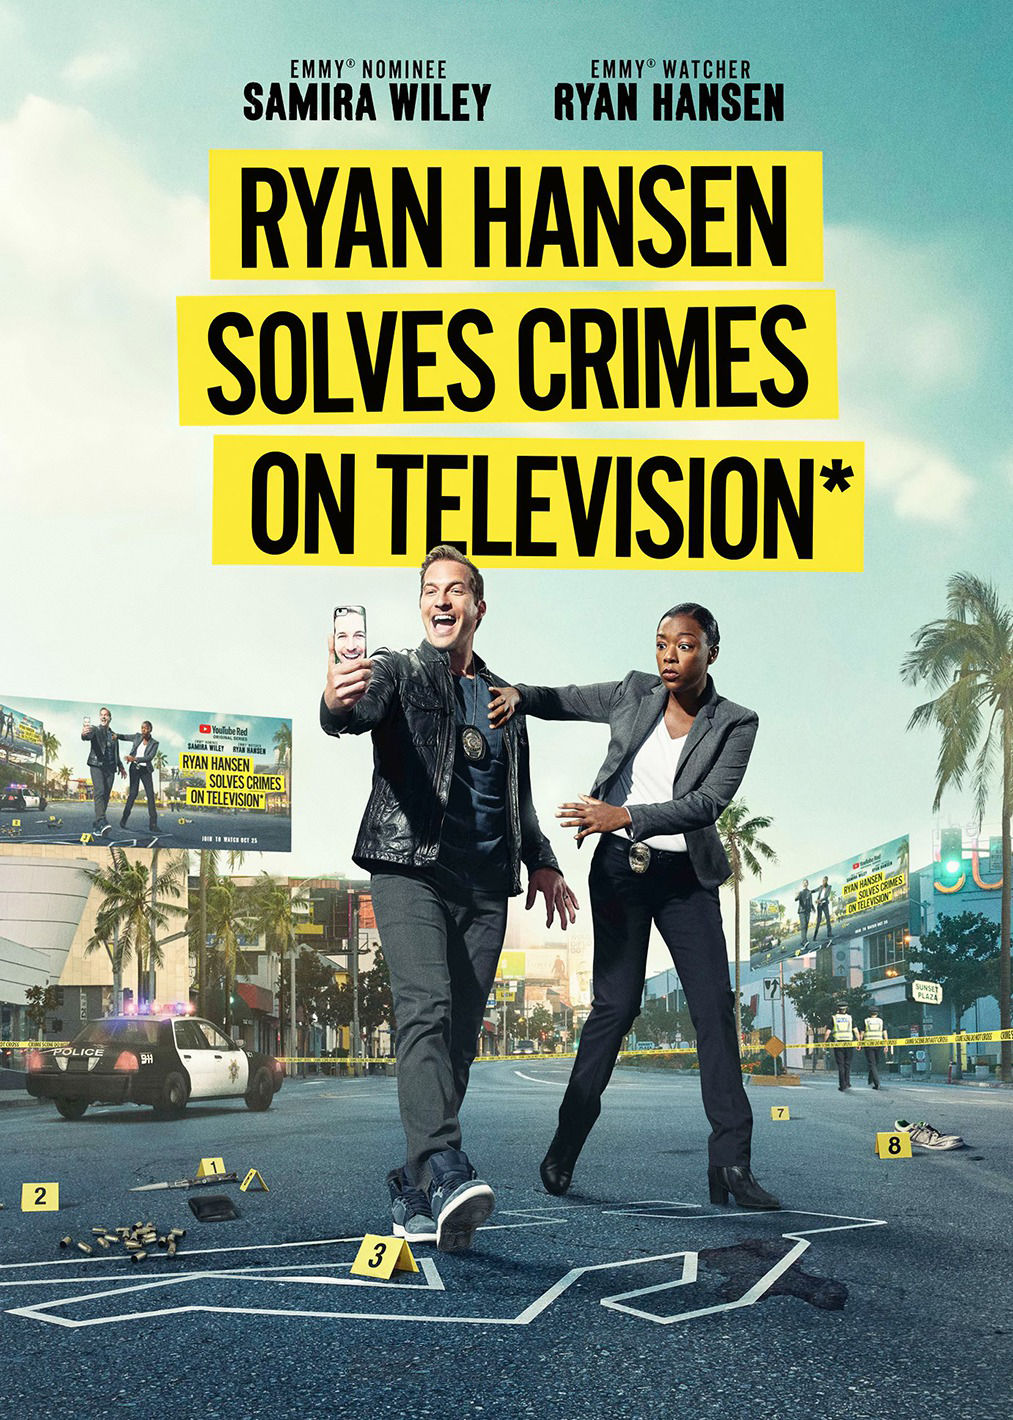 Ryan Hansen Solves Crimes on Television* ne zaman